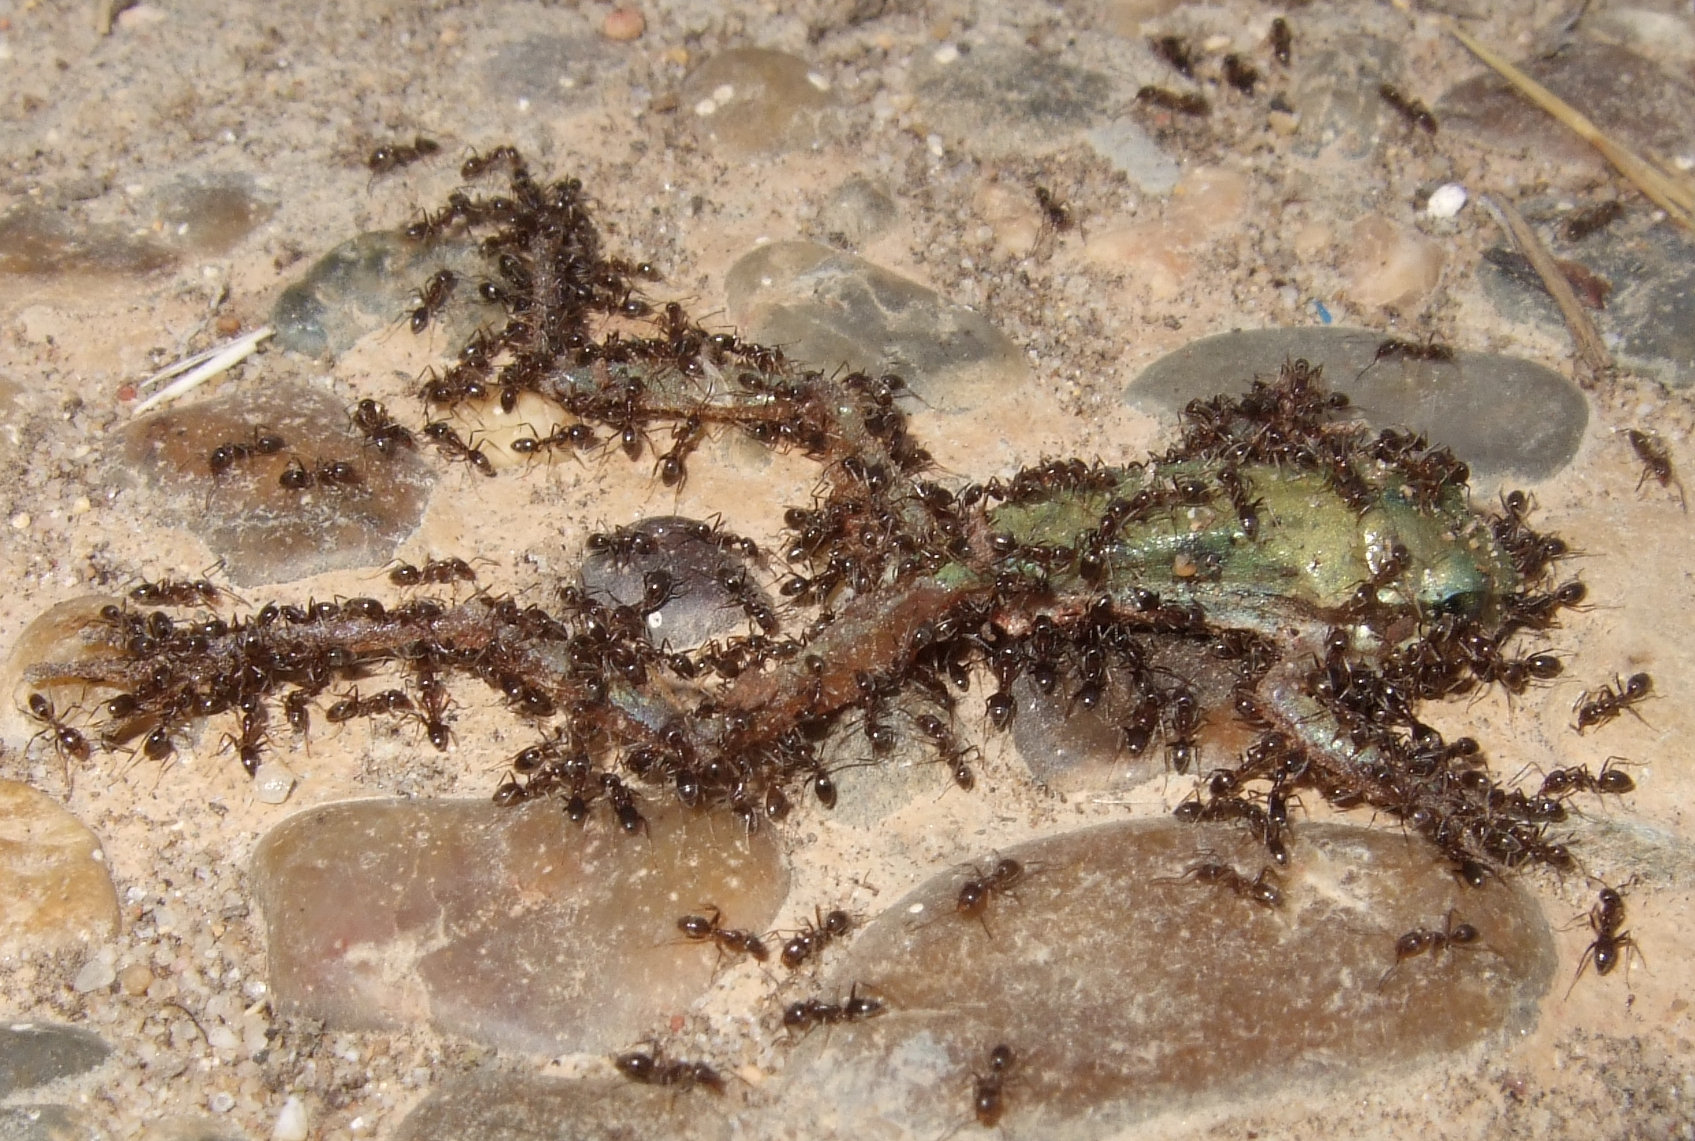 La hormiga argentina emplea veneno para atacar a los anfibios juveniles. Imagen: EBD-CSIC